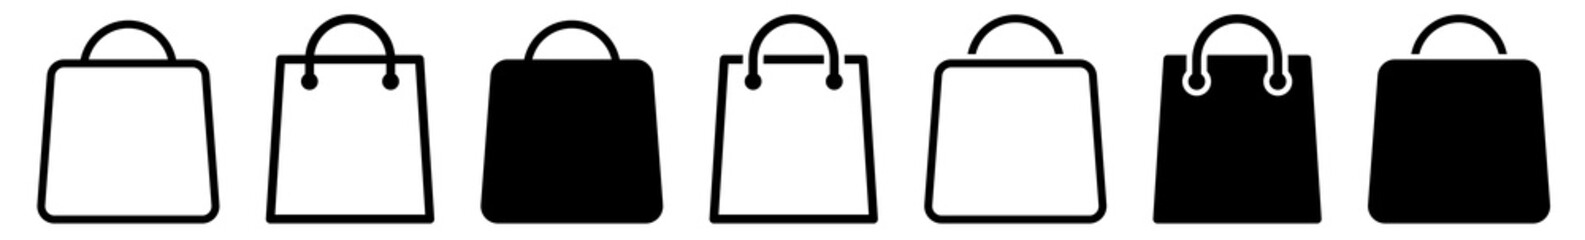 Shopping Bag Icon Black | Paper Bags Illustration | Online Shop Symbol | E-Commerce Logo | Commerce Sign | Isolated | Variations